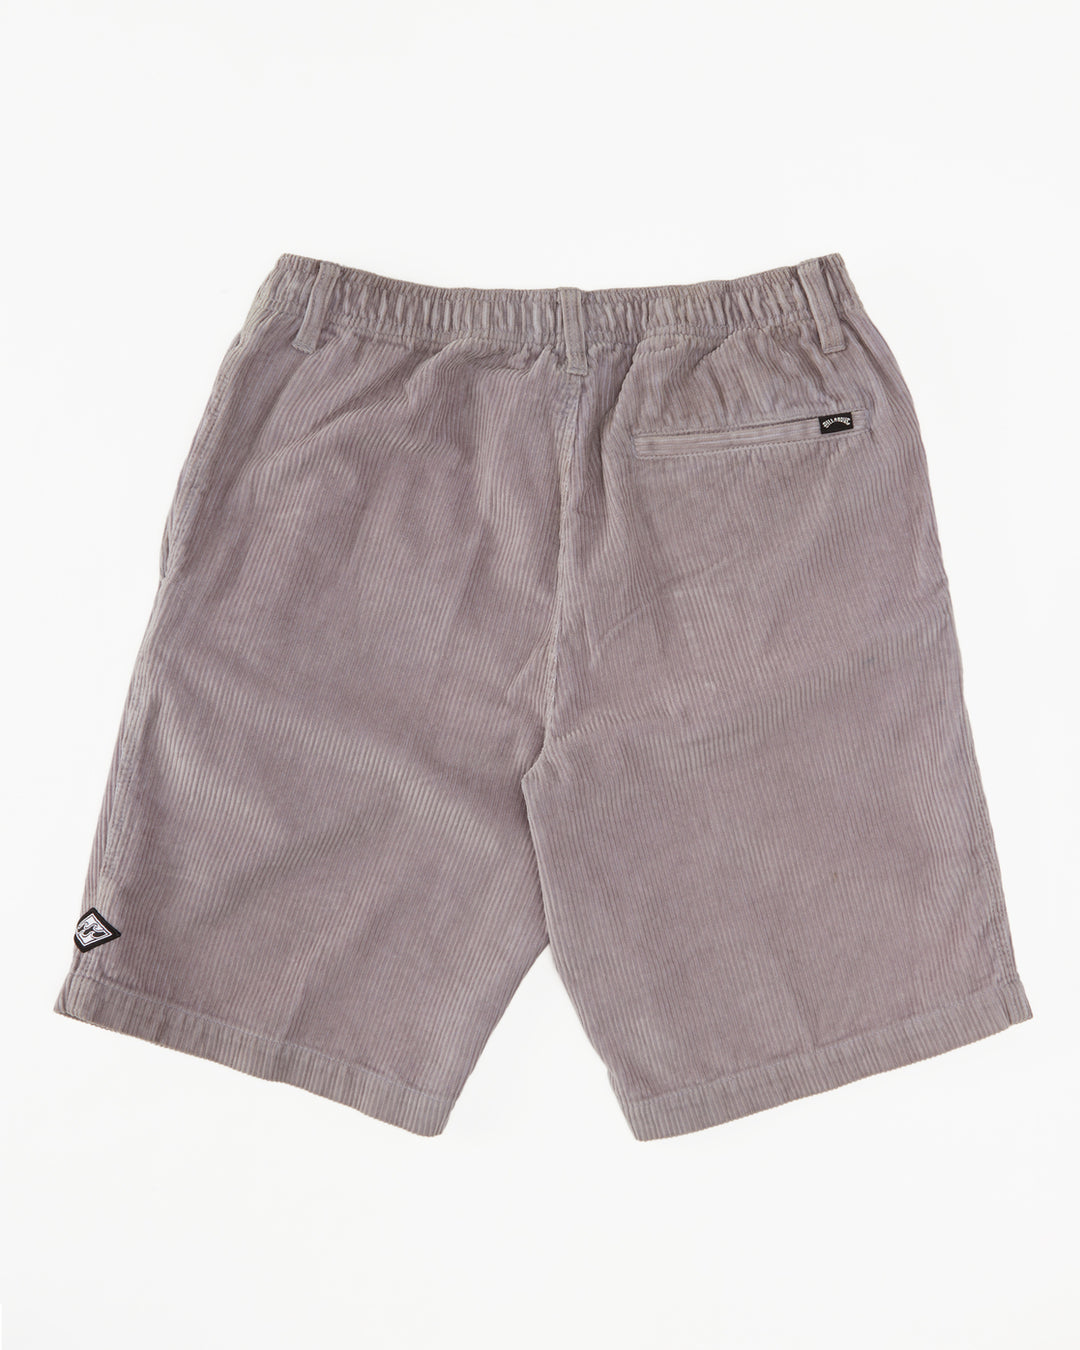 Billabong Larry Corduroy 20" Shorts - Grey Violet - Sun Diego Boardshop